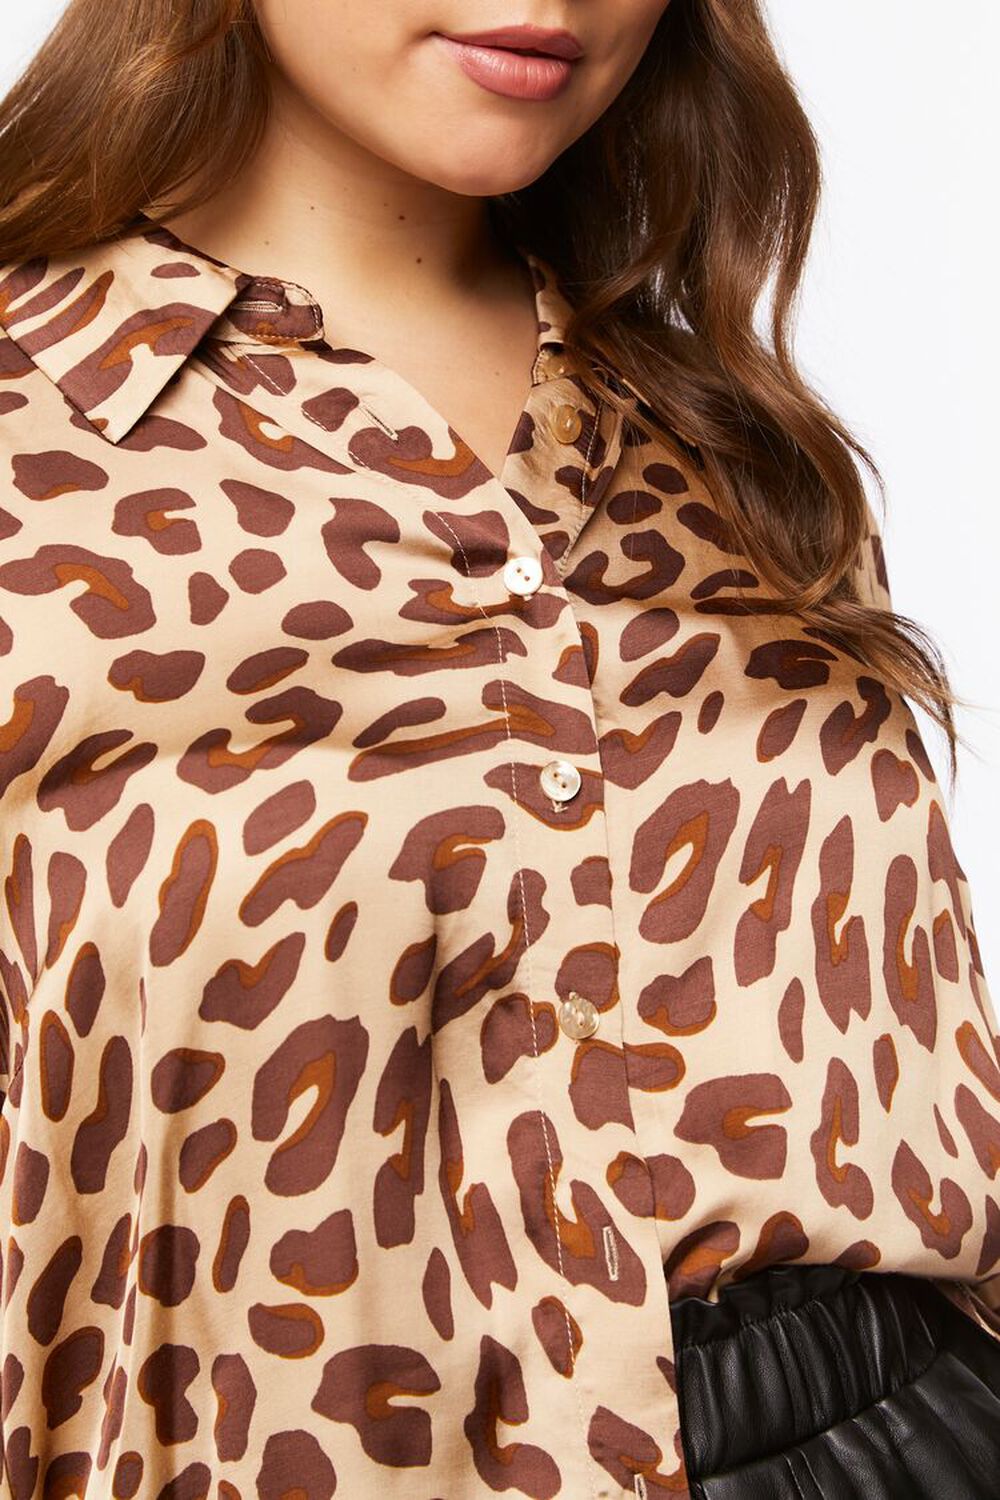 Women's fitted shirt with giraffe pattern